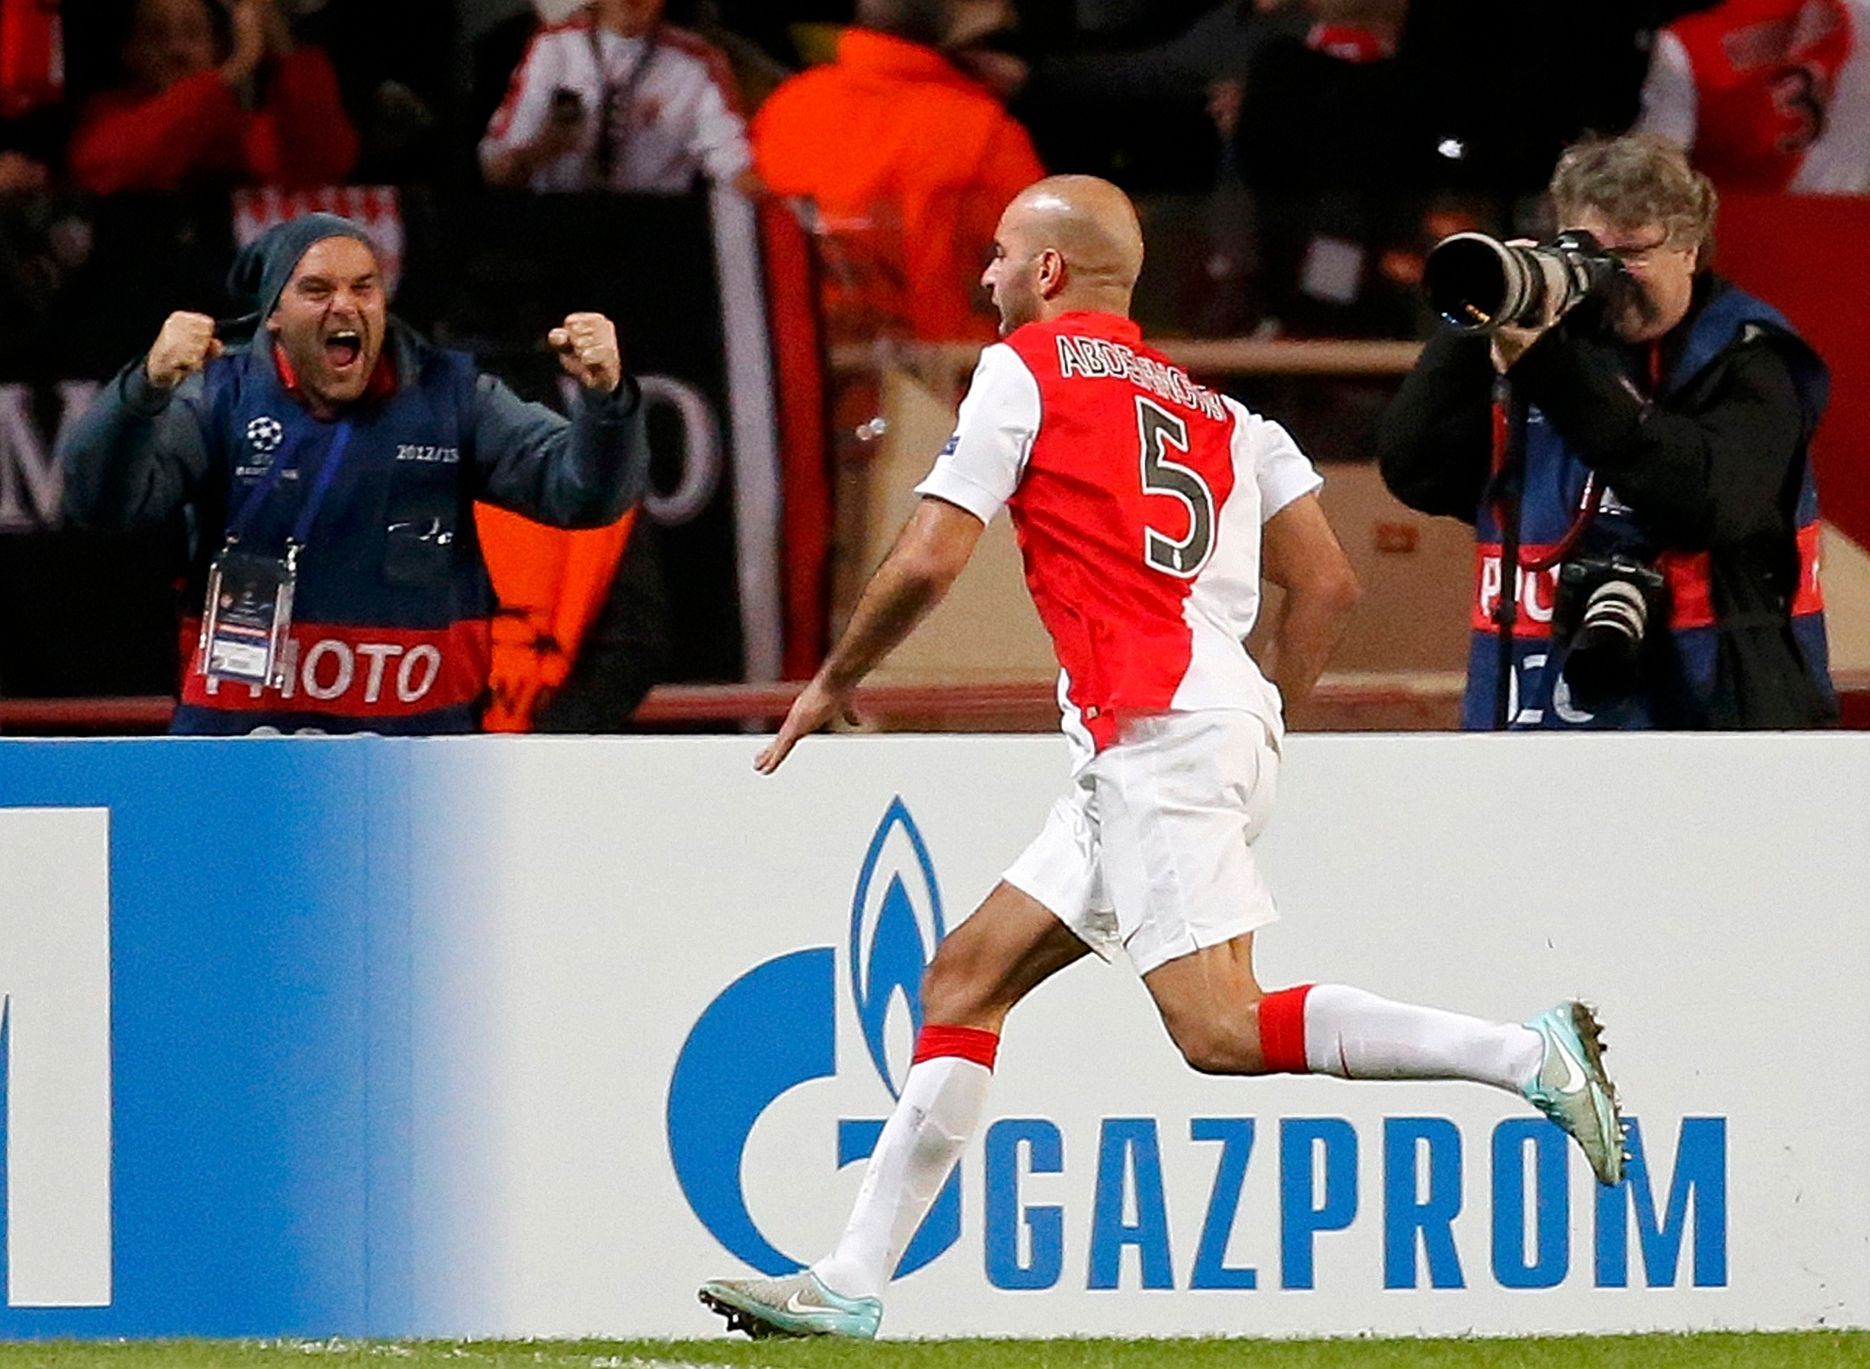 Monaco's Abdennour celebrates his goal against Zenit St. Petersburg during their Champions League Group C soccer match in Monaco